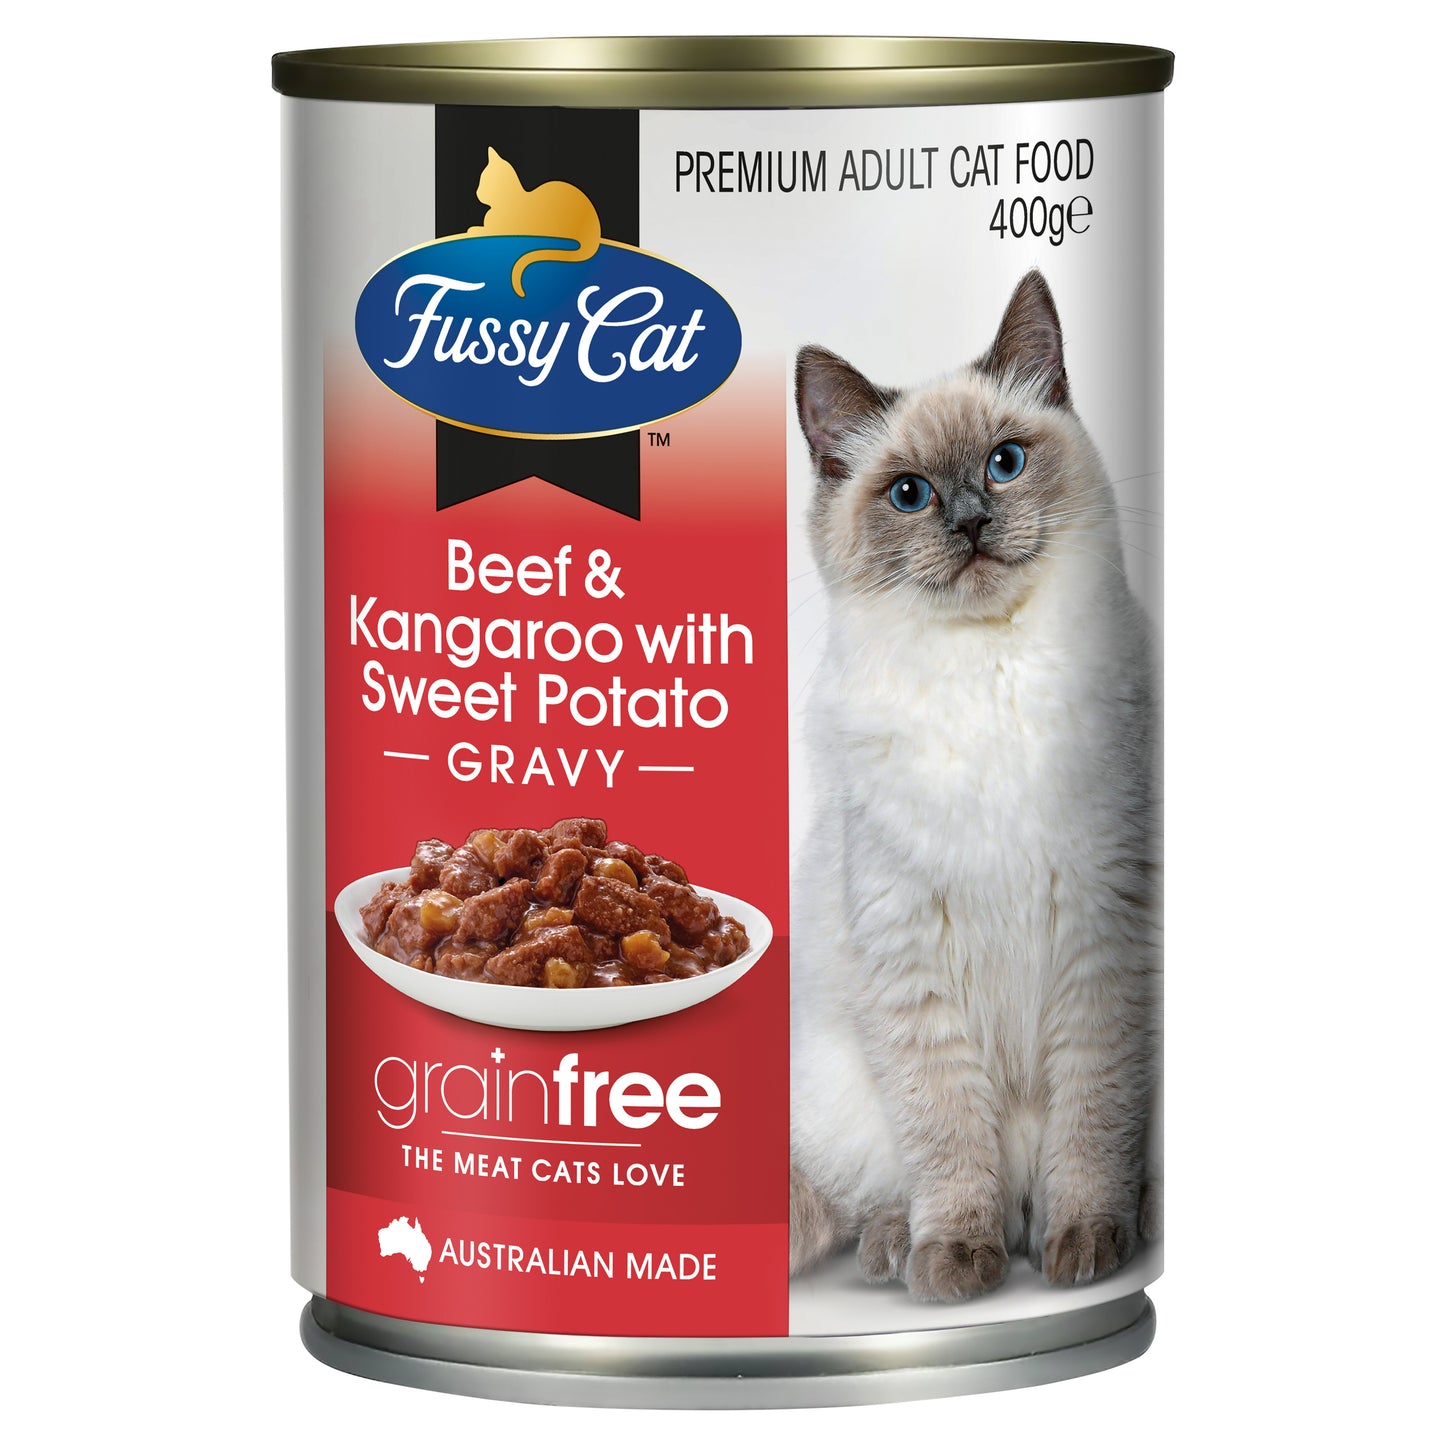 Fussy Cat Adult Grain Free Beef & Kangaroo with Sweet Potato 400g x 12